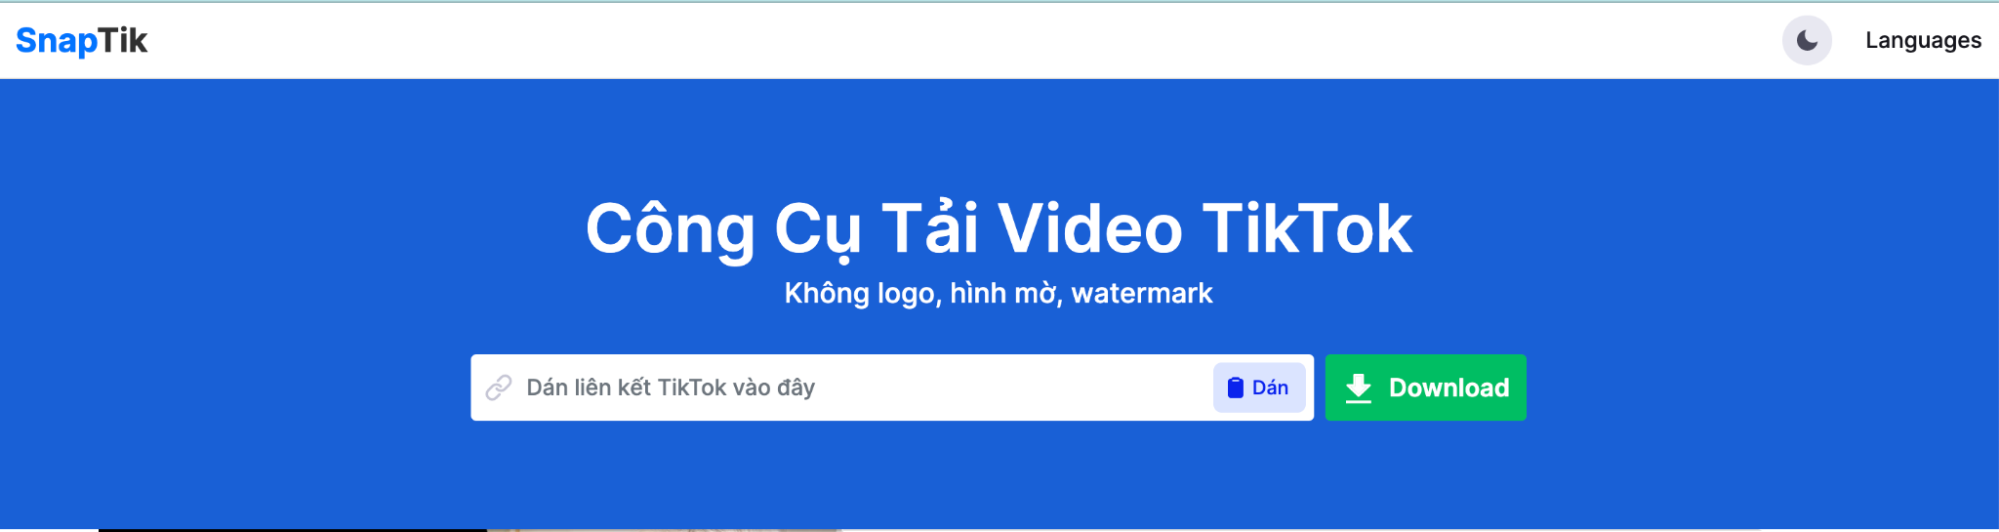 Lưu video trên Tik Tok bằng trang web Snap Tik